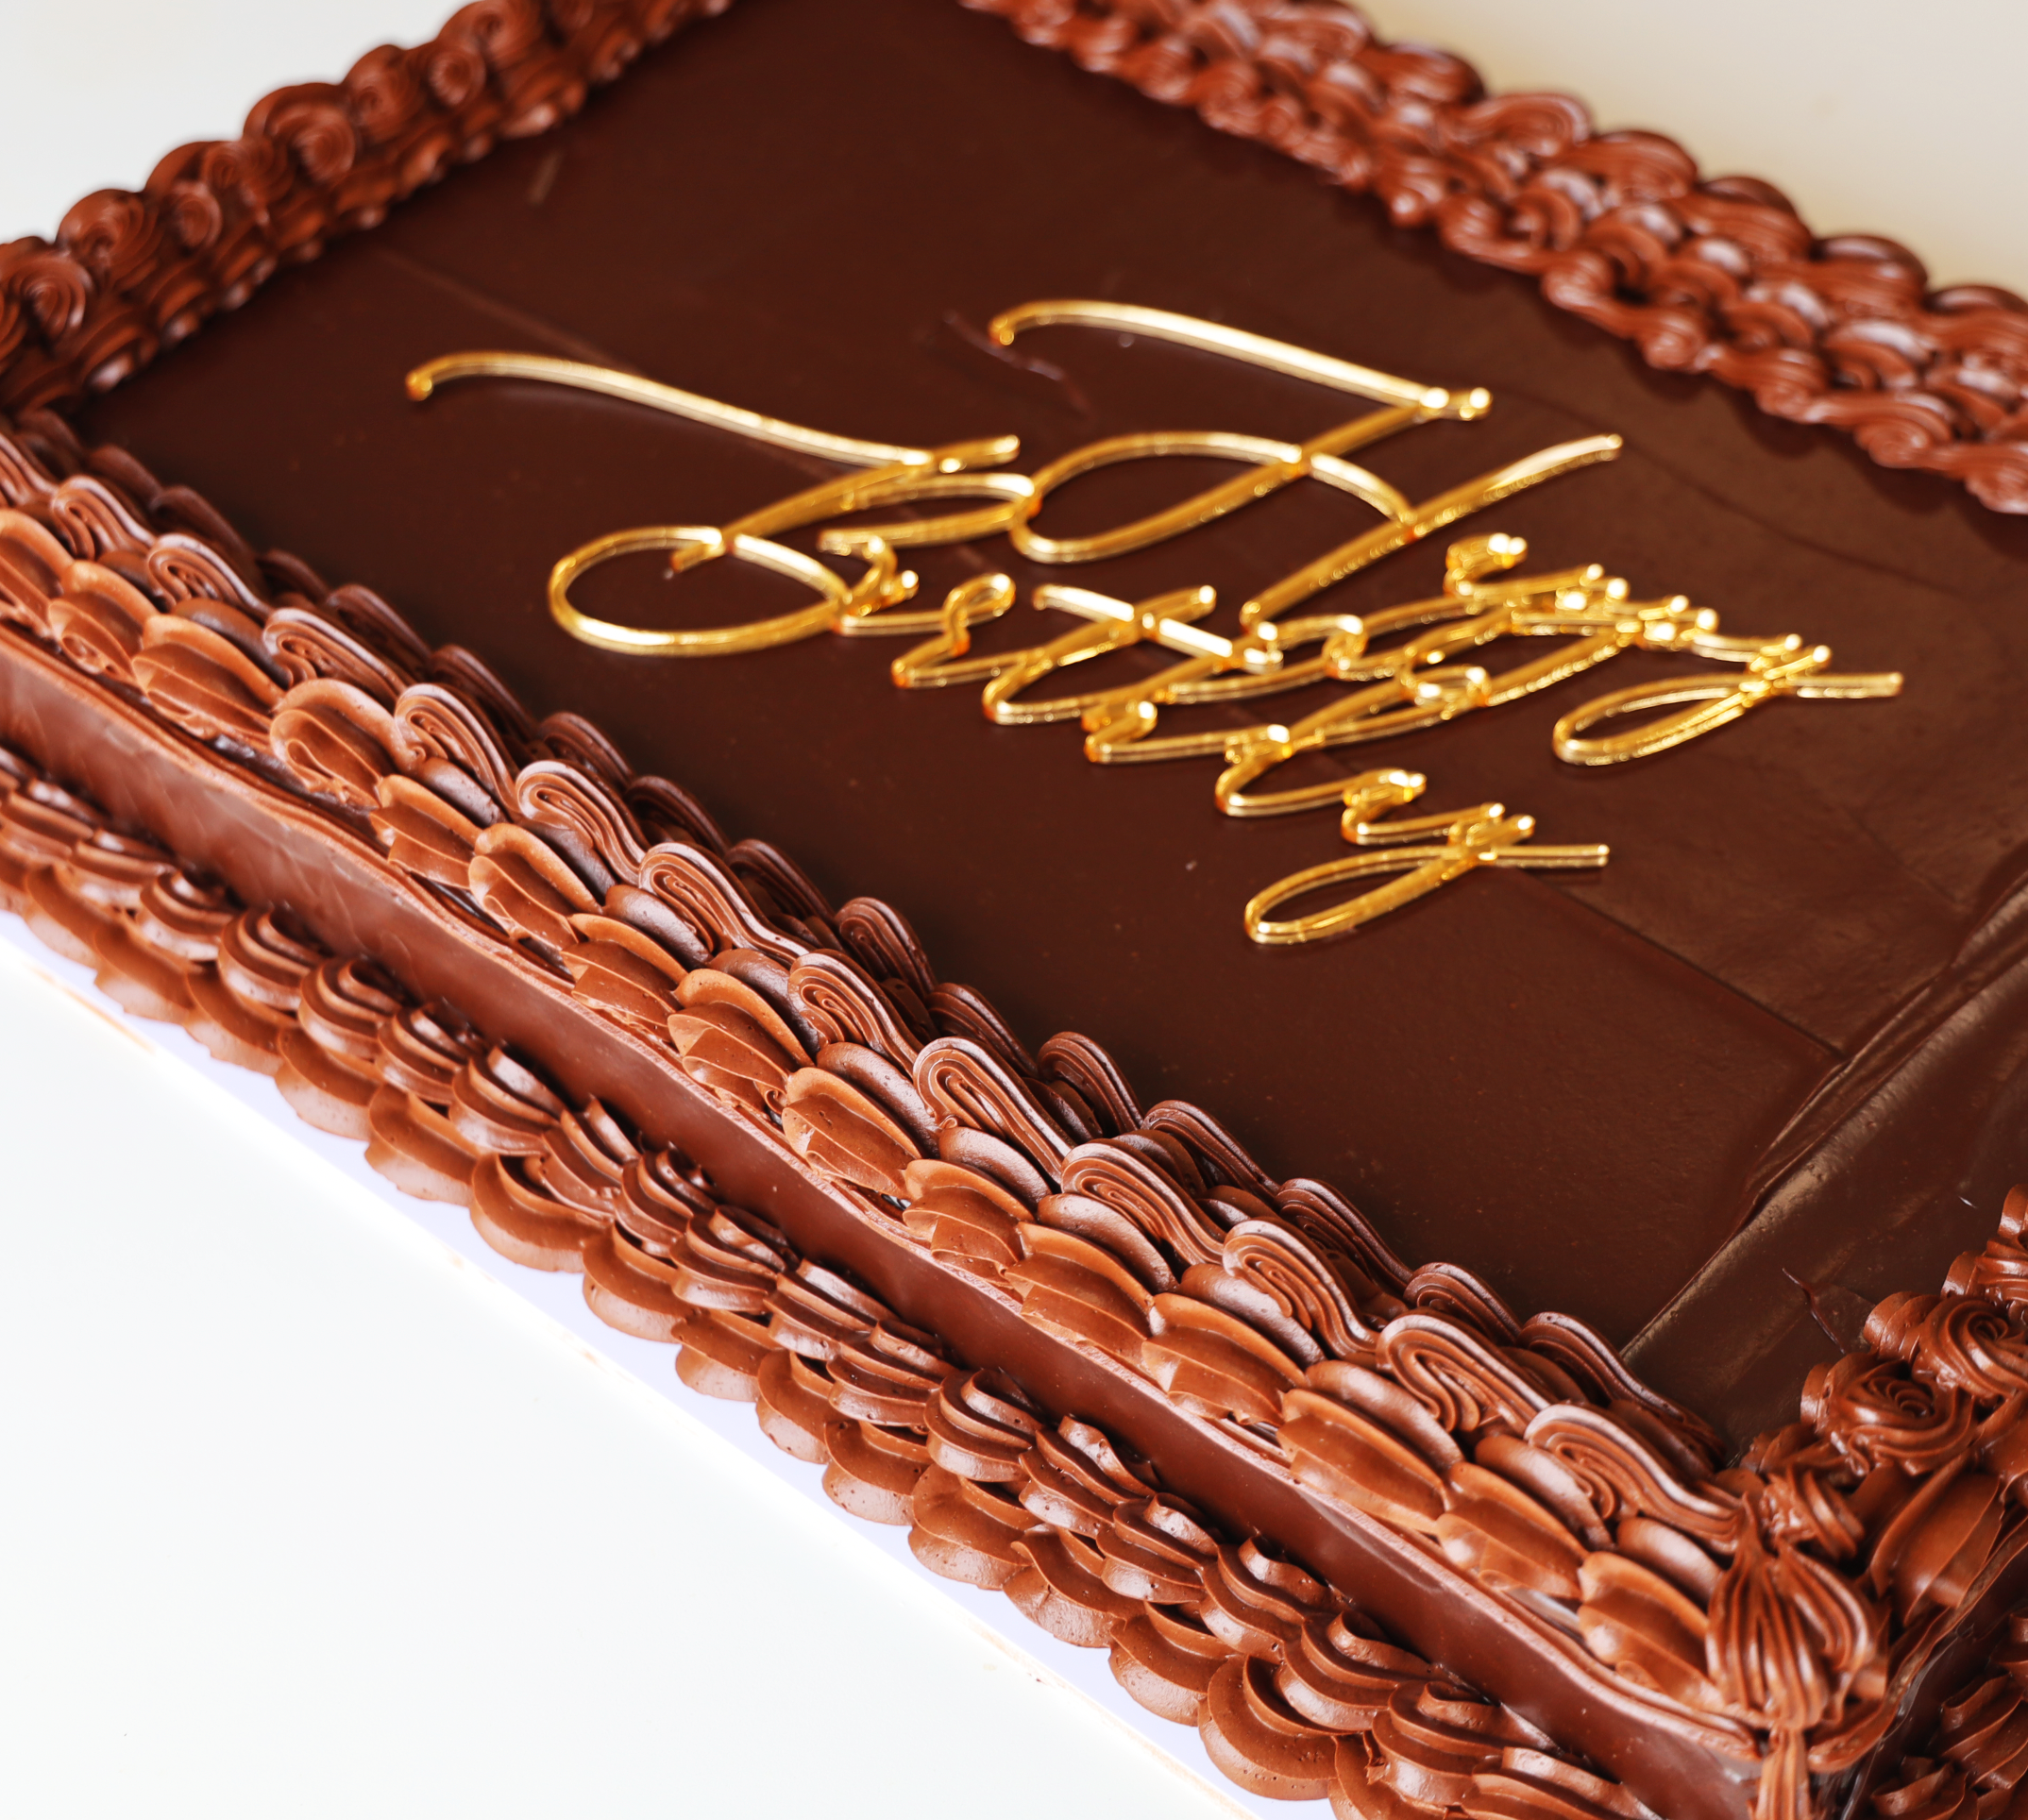 Luscious Chocolate Vintage Birthday Sheet Cake (Gluten Free)